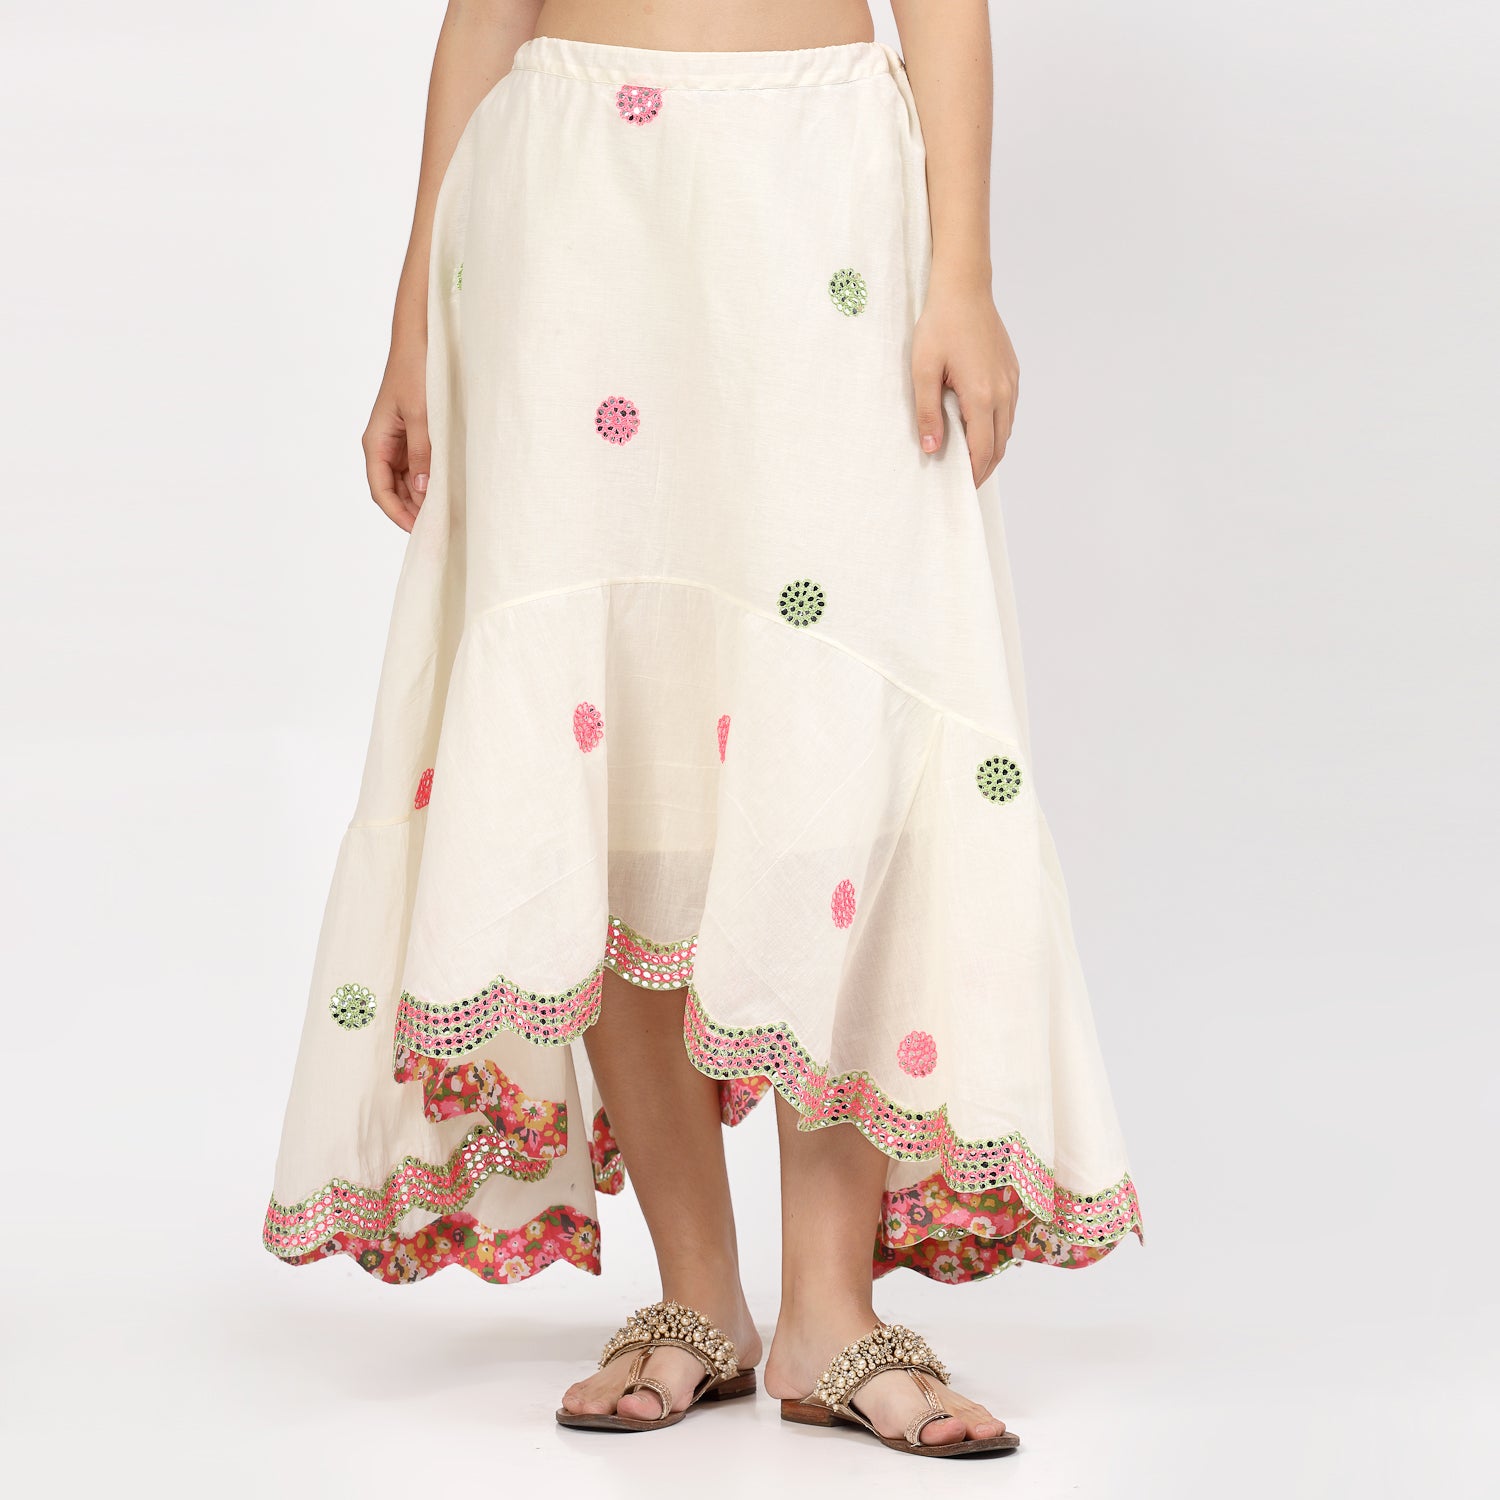 Details more than 254 asymmetrical long skirt best